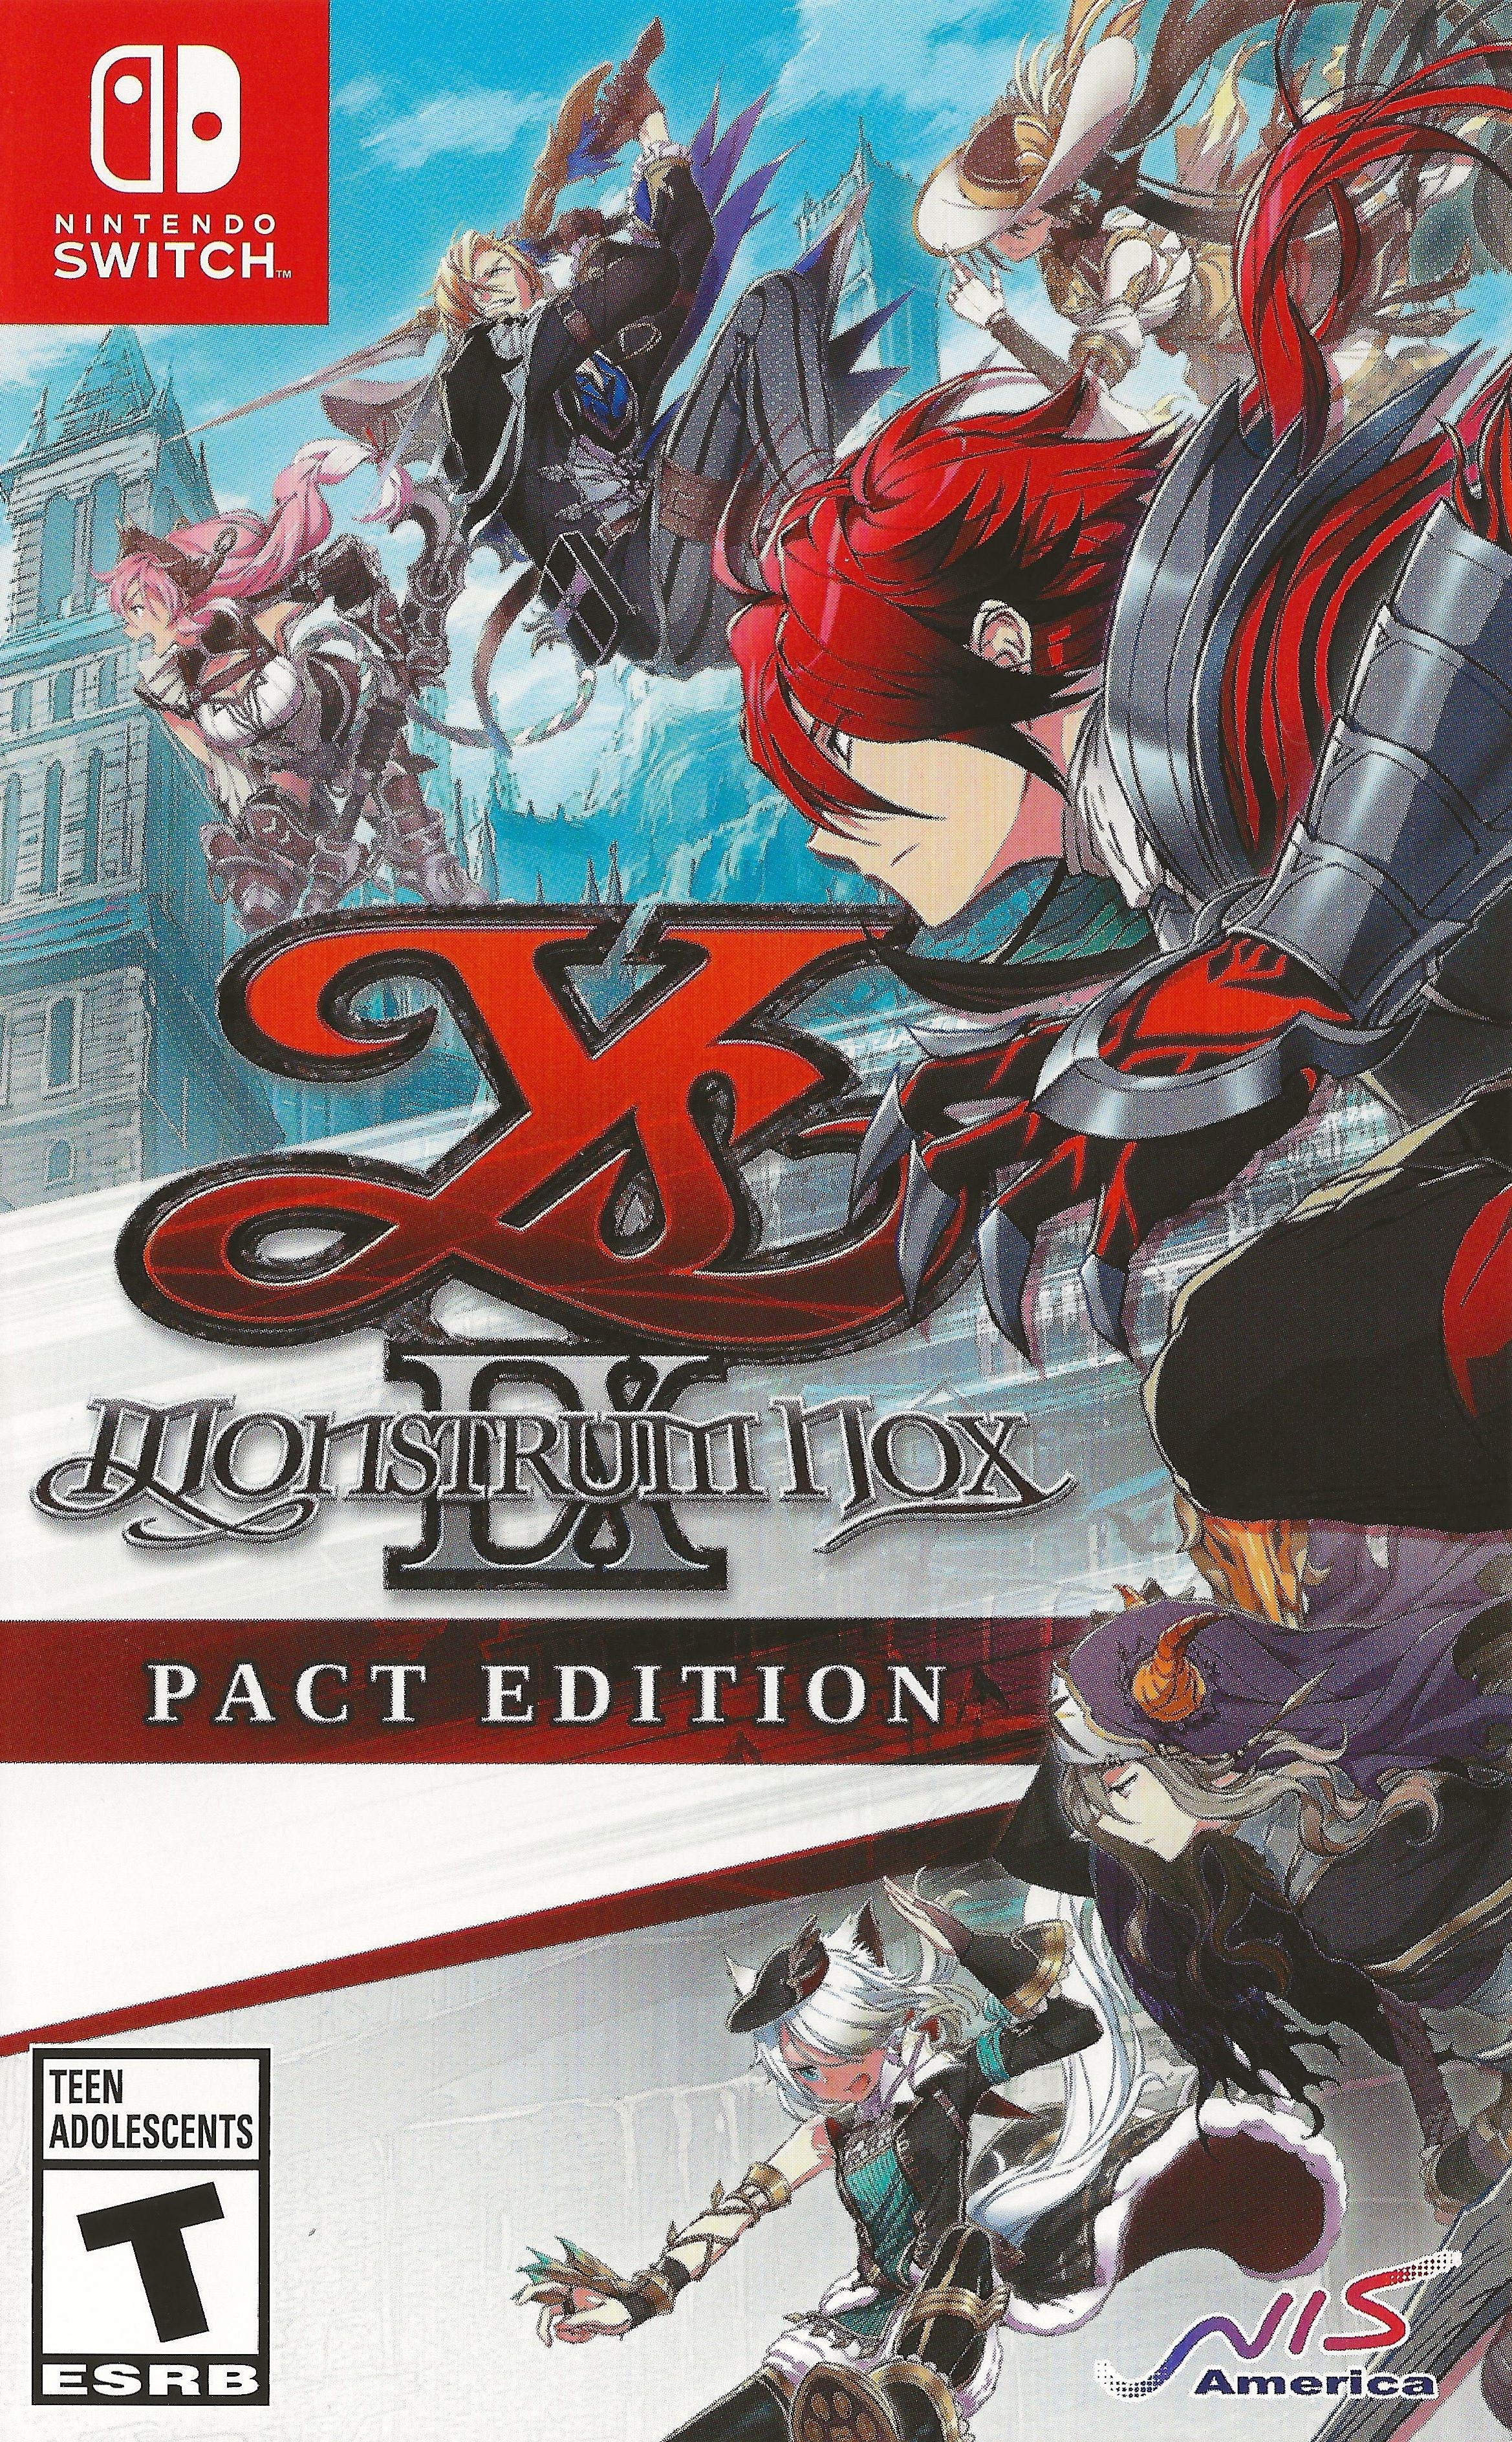 Ys IX: Monstrum - Nox Pact Edition